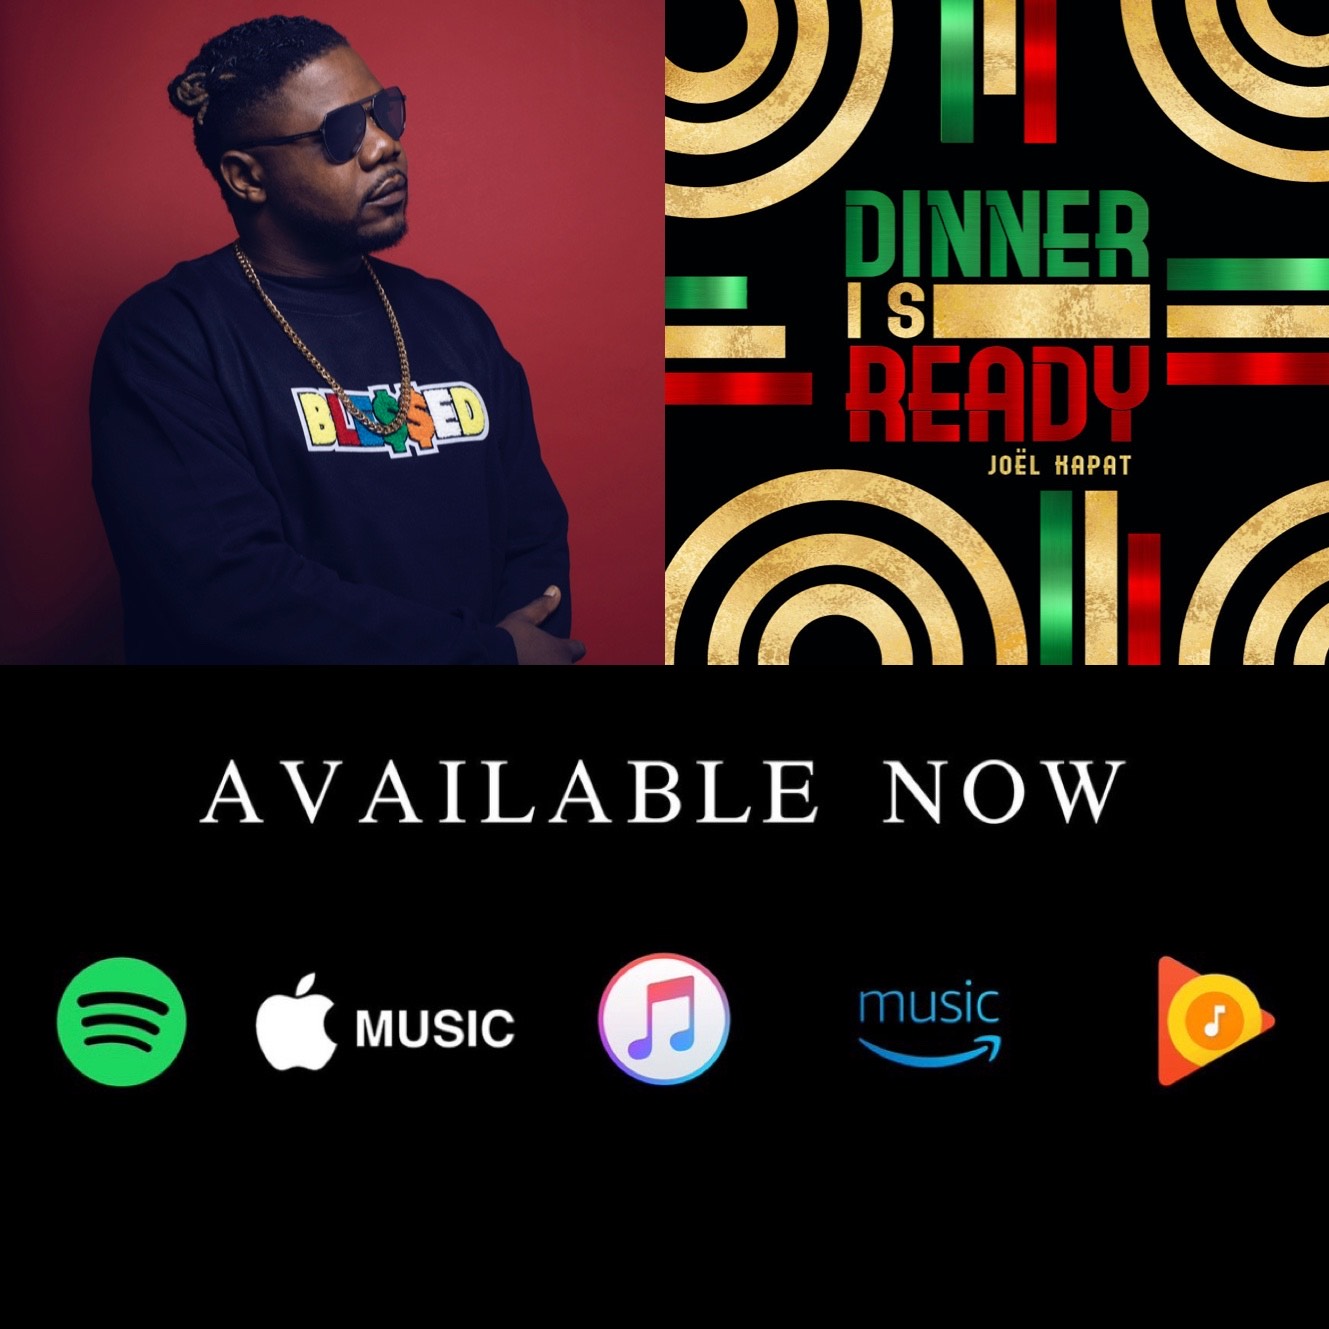 Set To Serve Fresh Beats And Rhythms - Joel Kapat Unveils Latest Album Titled ‘Dinner Is Ready’